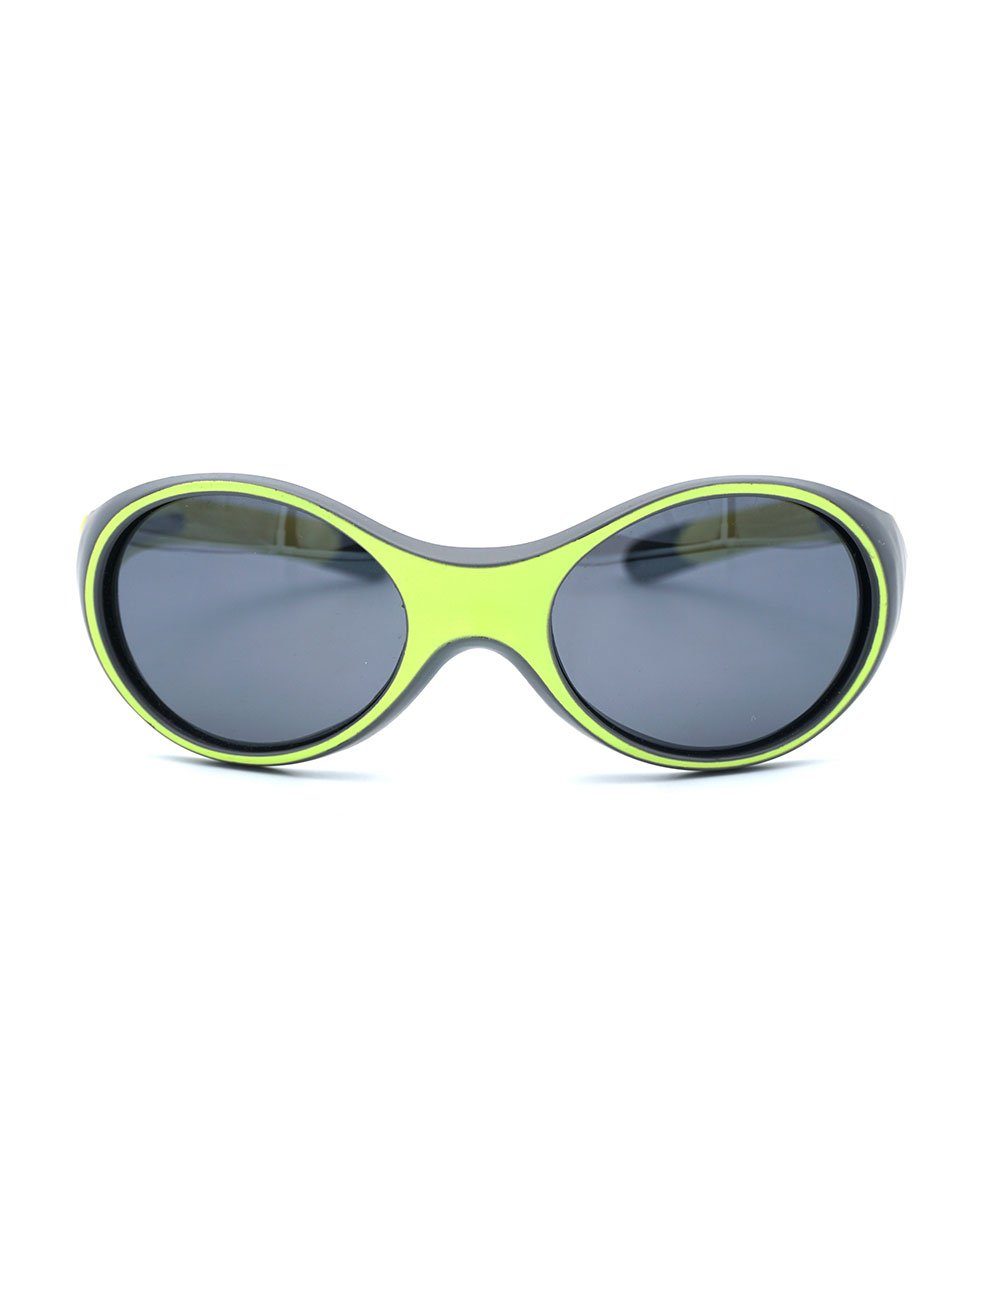 MAXIMO Sonnenbrille KIDS-Sonnenbrille 'sporty' inkl.Box,Microfaserb. bright green/dark grey